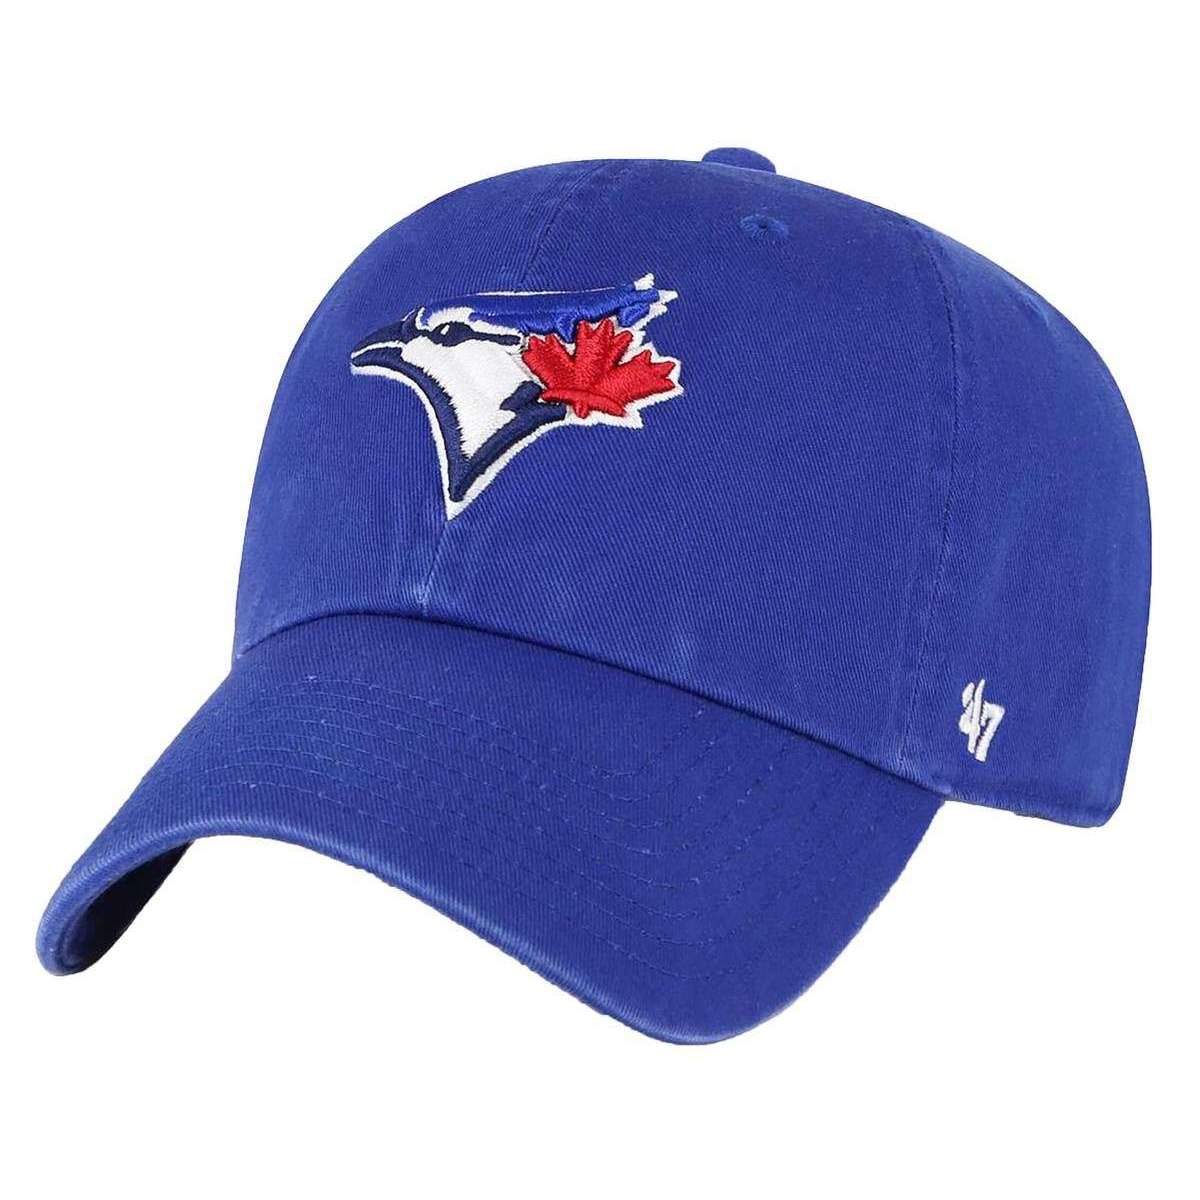 47 Brand Clean Up MLB Toronto Blue Jays Cap - Royal Blue/White